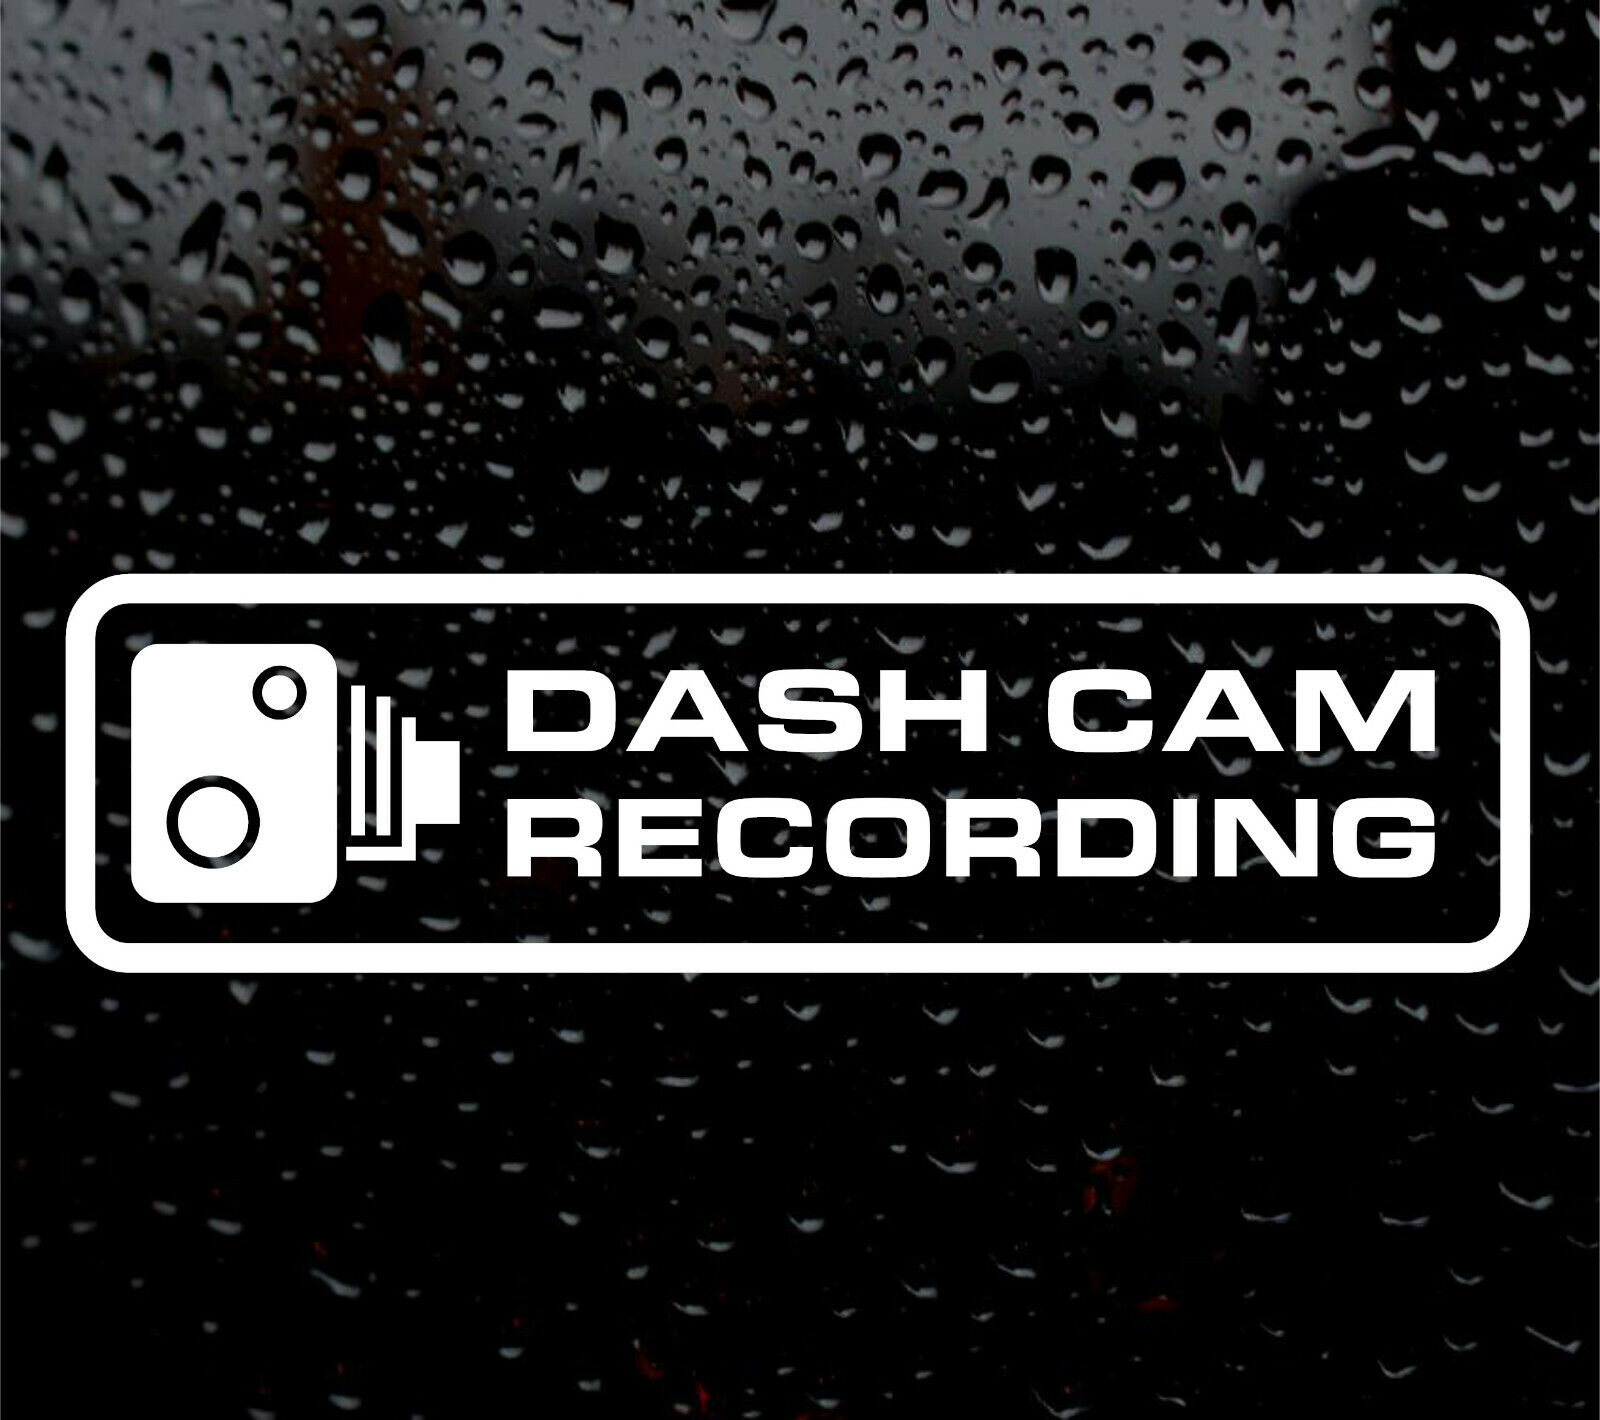 DASH CAM RECORDING CAR STICKER DECAL WINDOW FUNNY BUMPER CCTV HD CAMERA CAM  | eBay